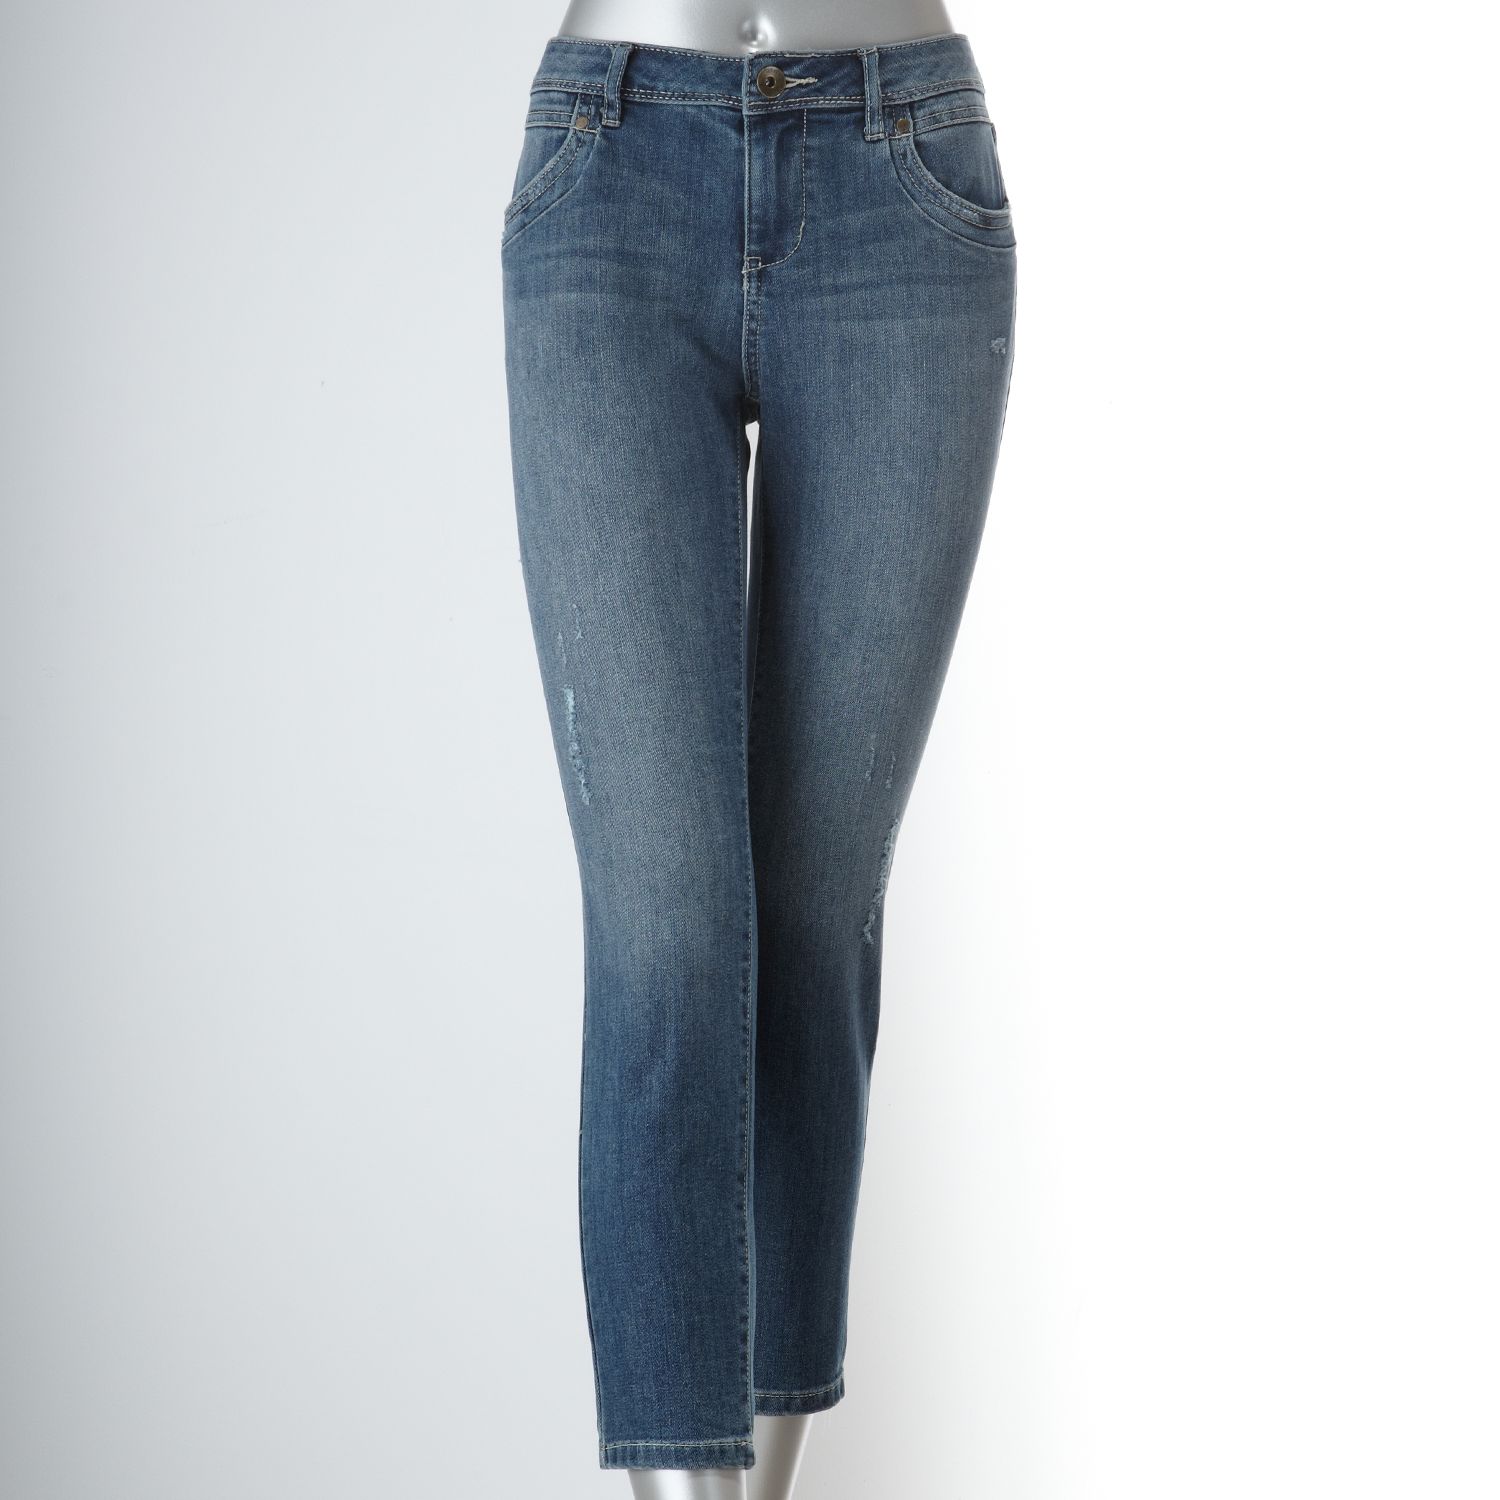 vera wang skinny jeans kohls